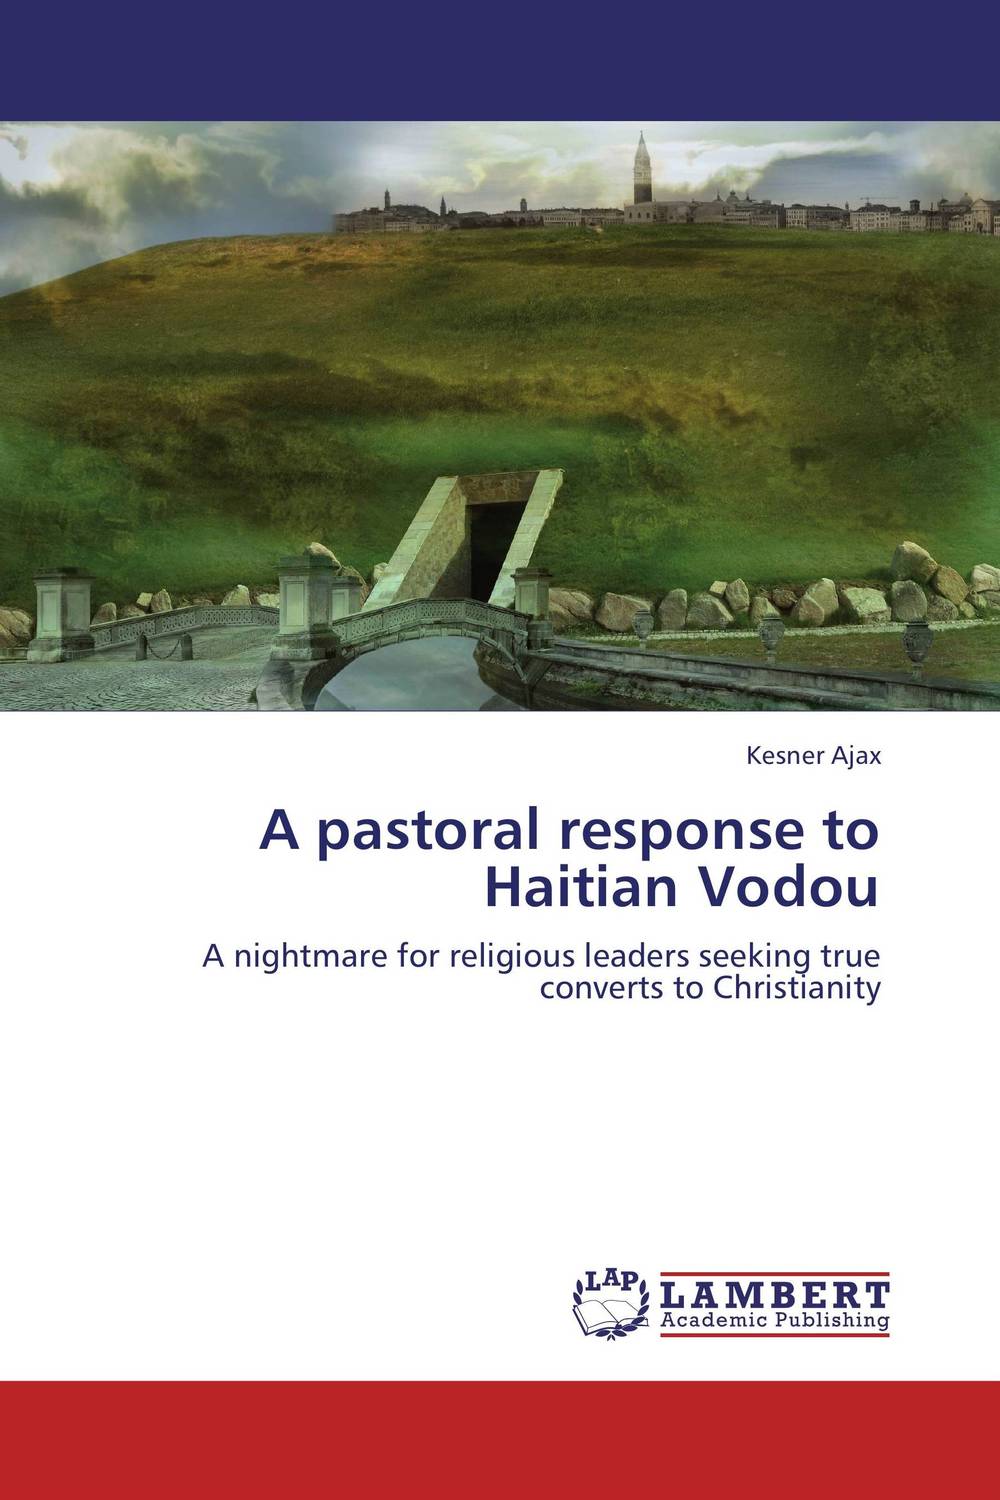 A pastoral response to Haitian Vodou